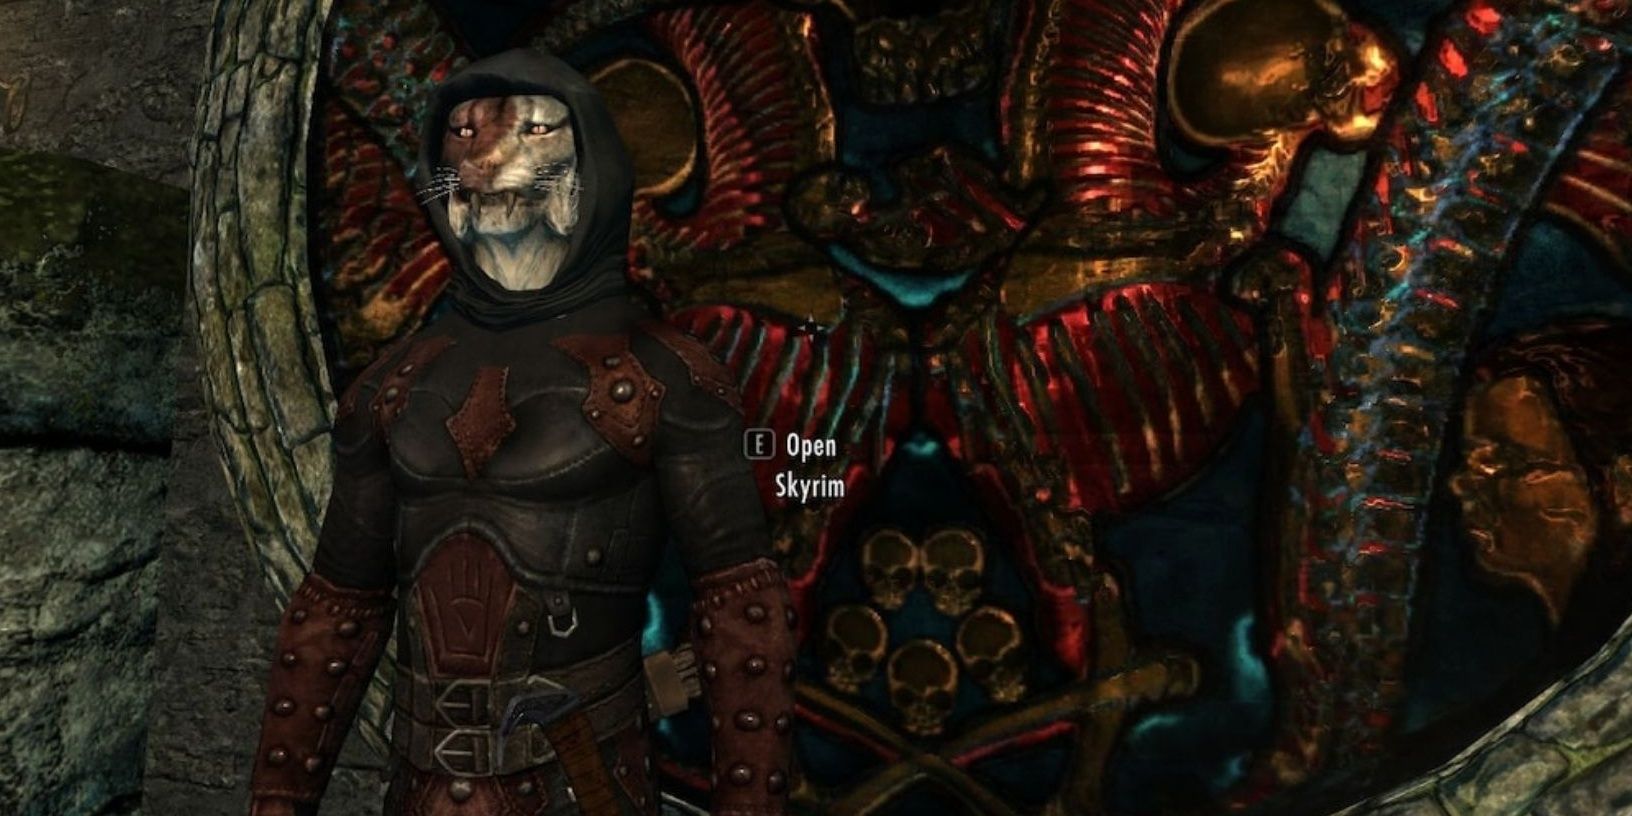 Skyrim Assassin and Vampiric Khajiit Character standing before the symbol of Sithis